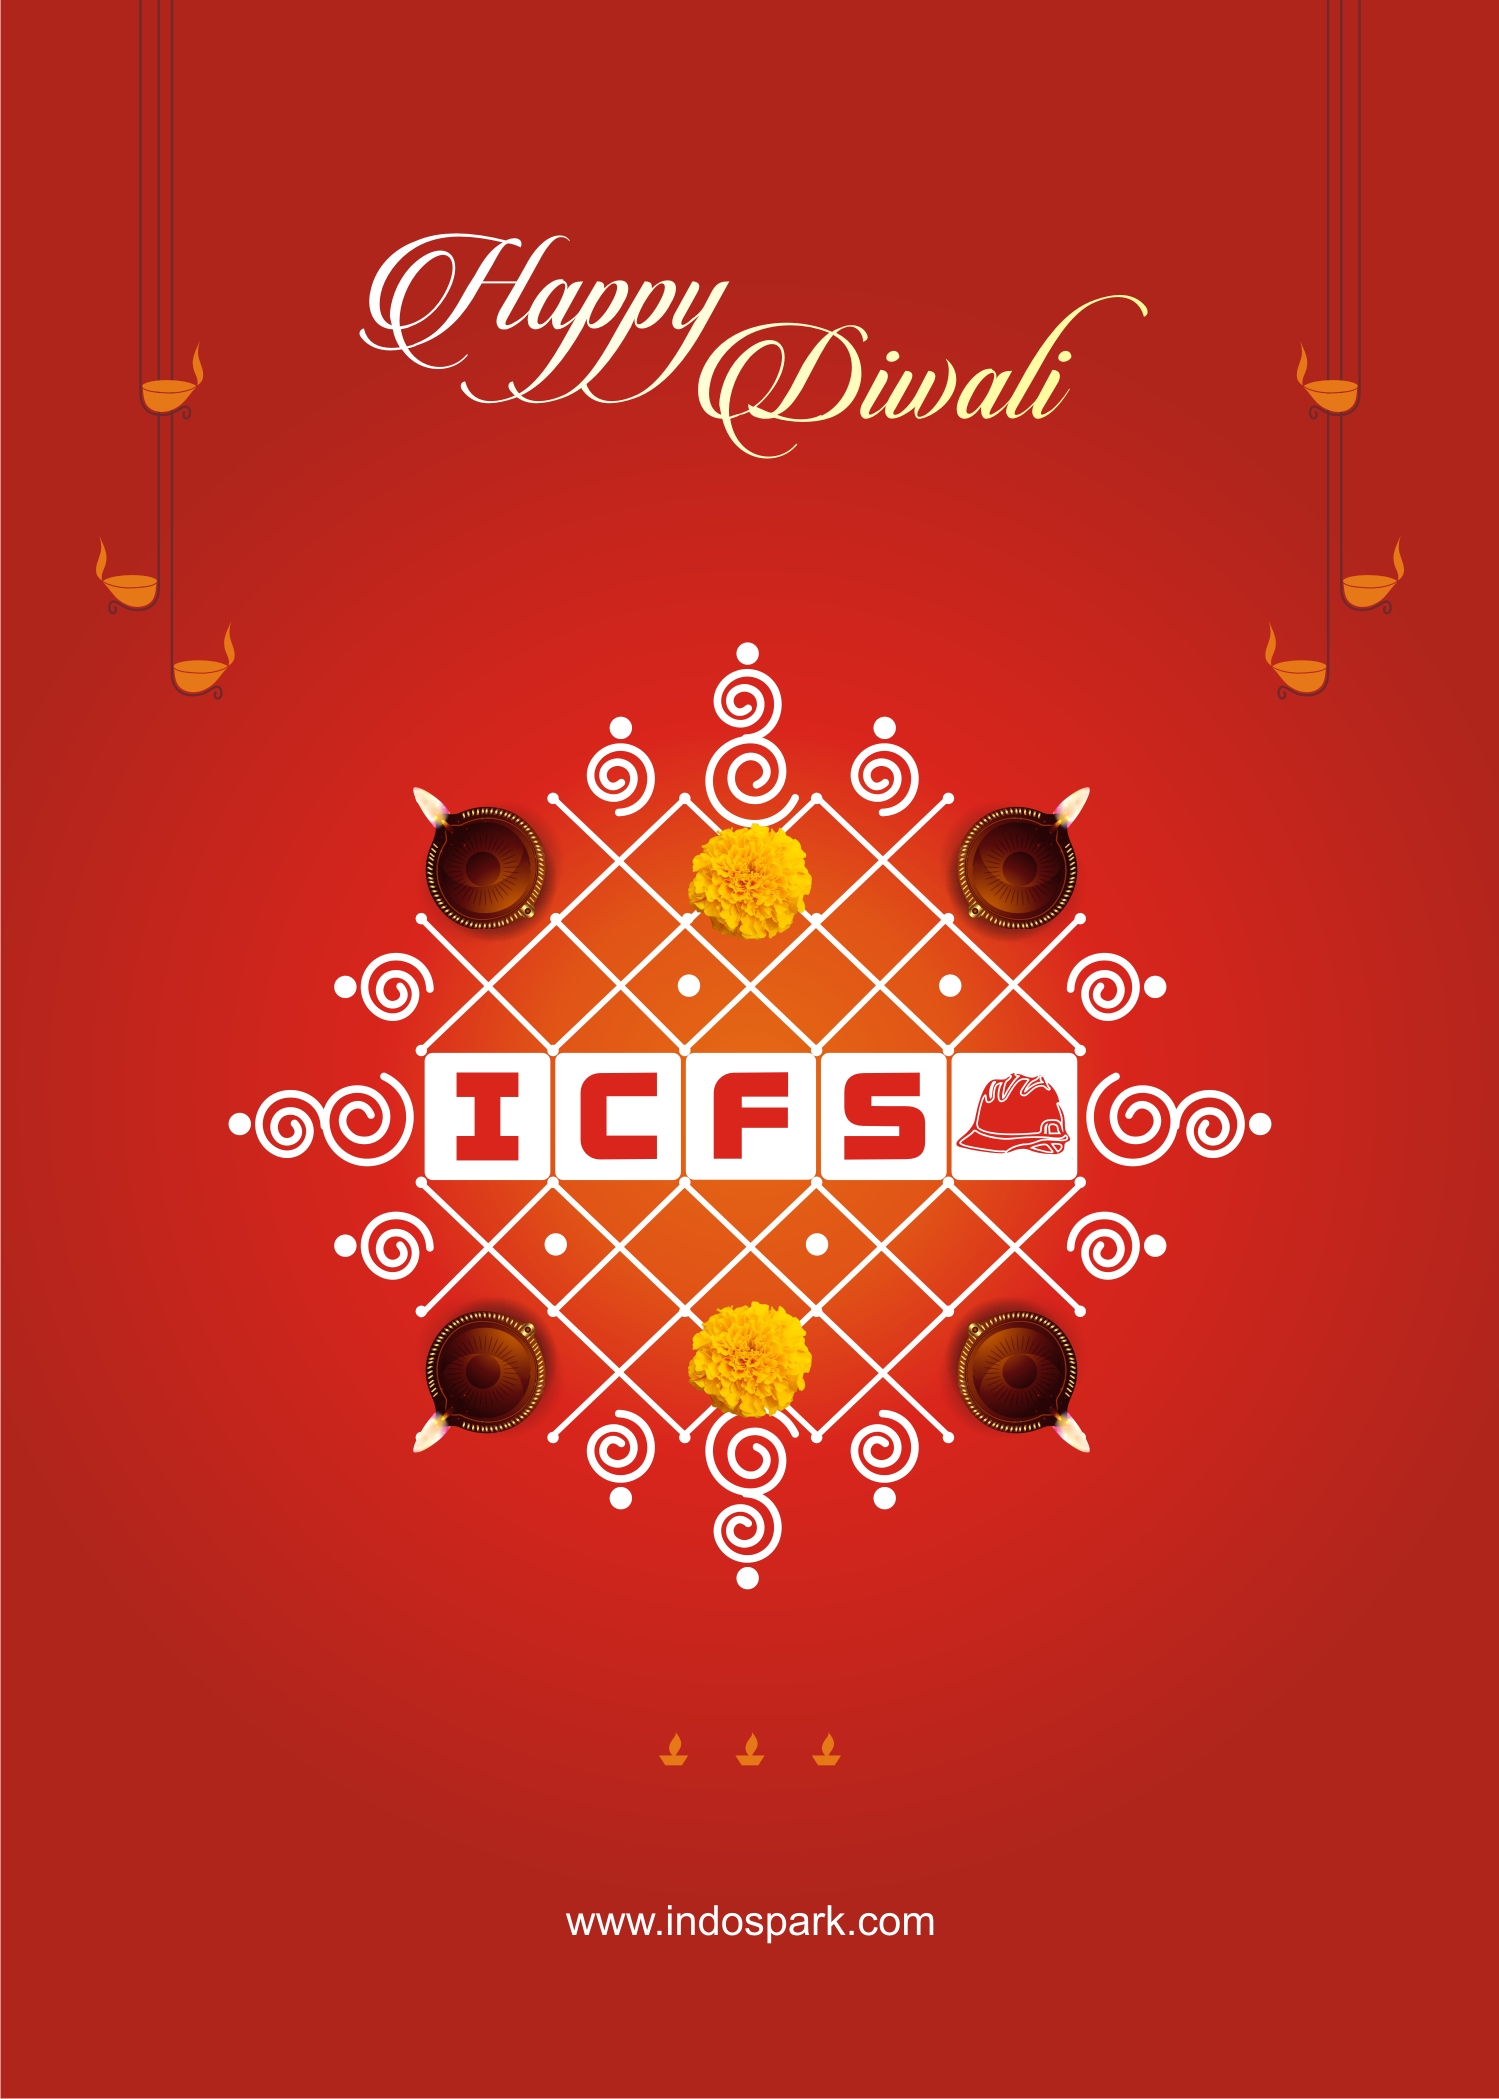 Happy Diwali_2019